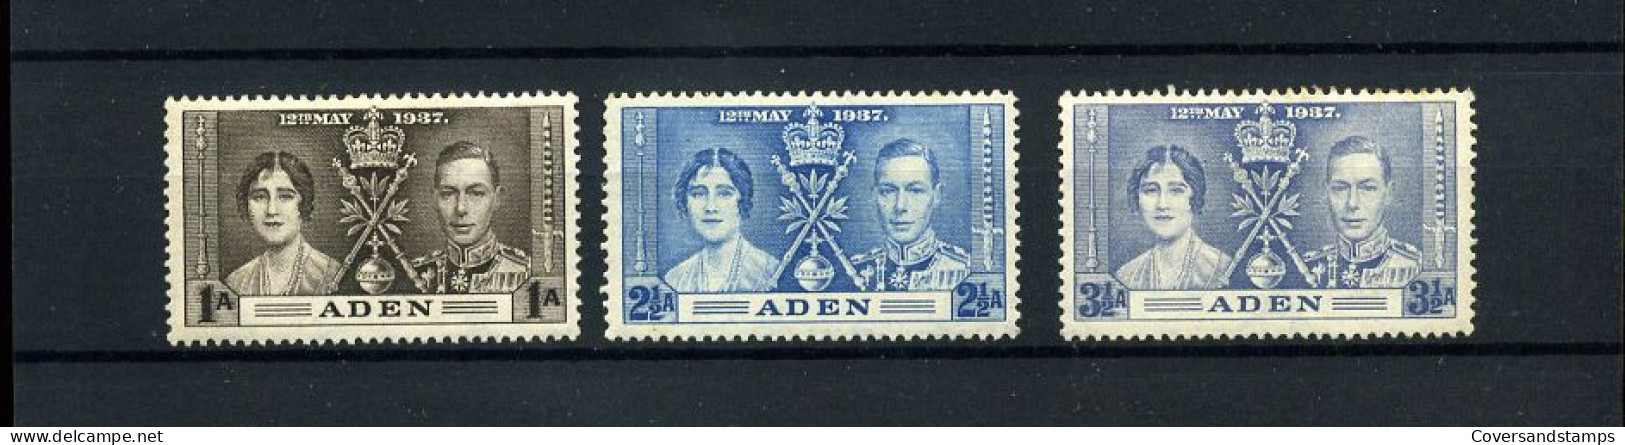 Aden - Coronation 1937 - Ouderdomsvlekjes / Age Spots - MH - Aden (1854-1963)